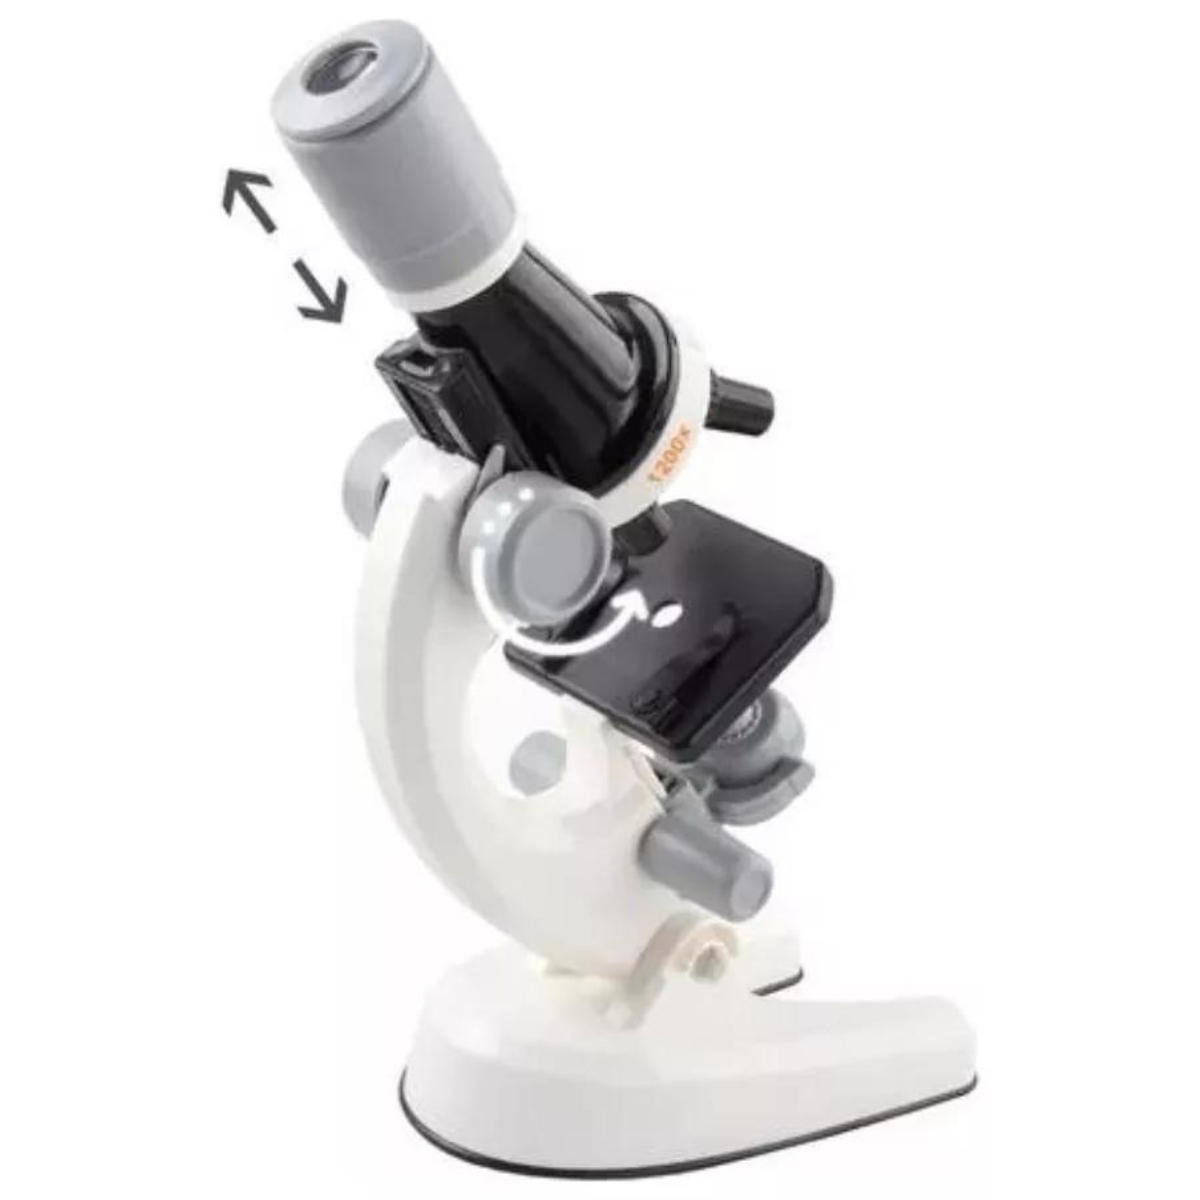 Kit Microscopio Compuesto Infantil